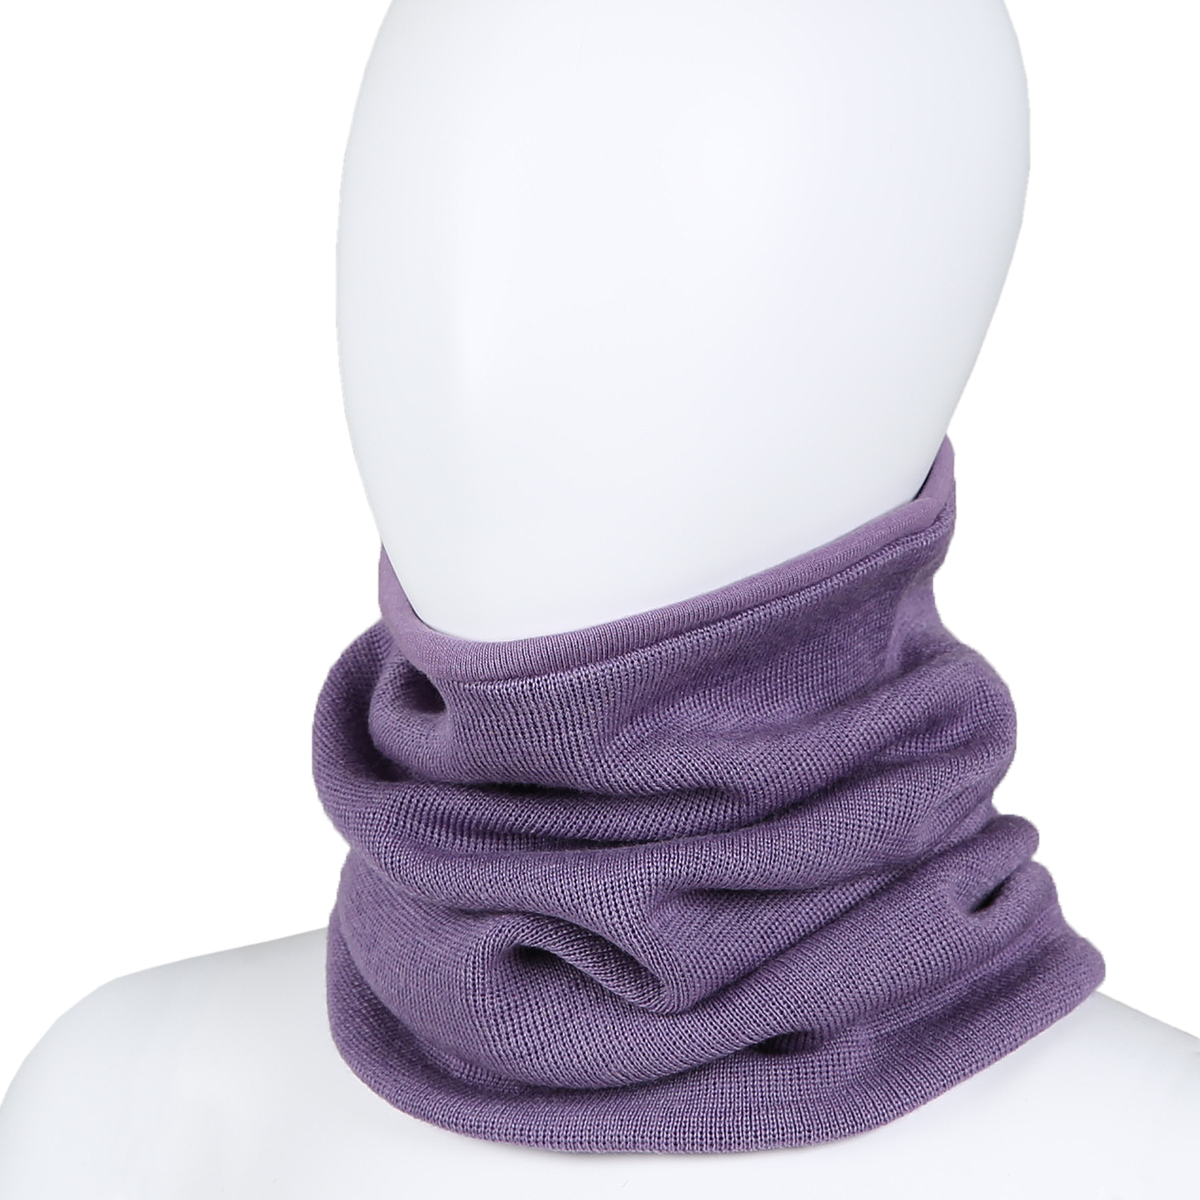 Wool tube scarf